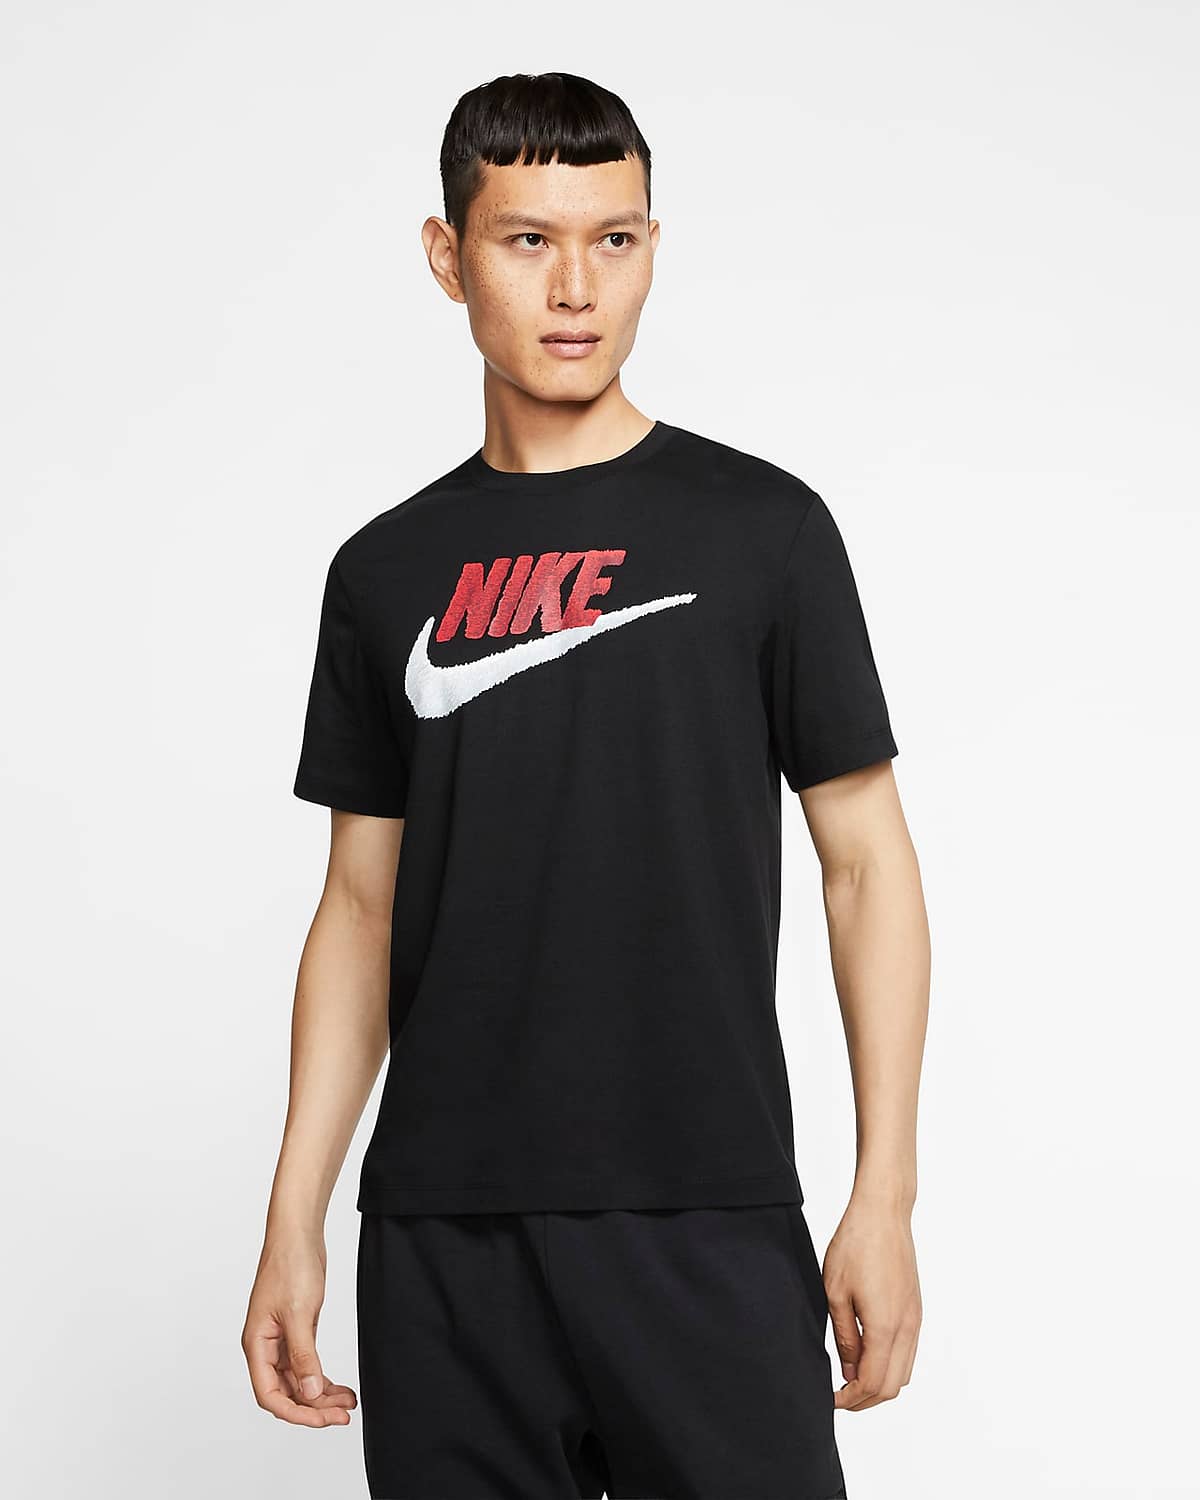 Black Nike T Shirts